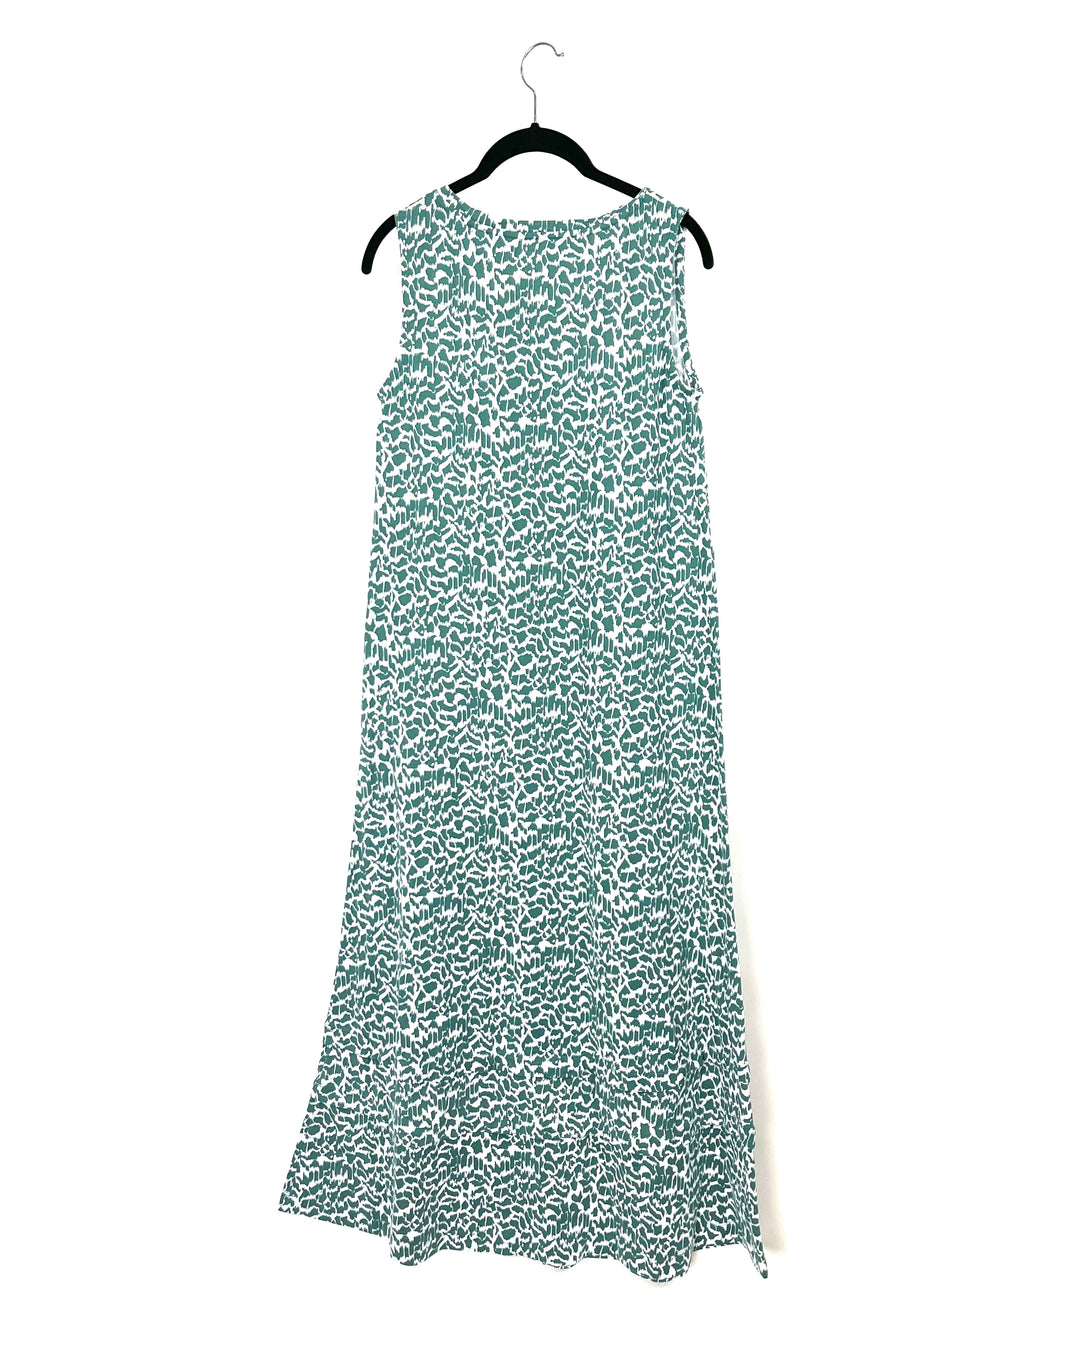 Green Abstract V-Neck Maxi Dress - Small/Medium